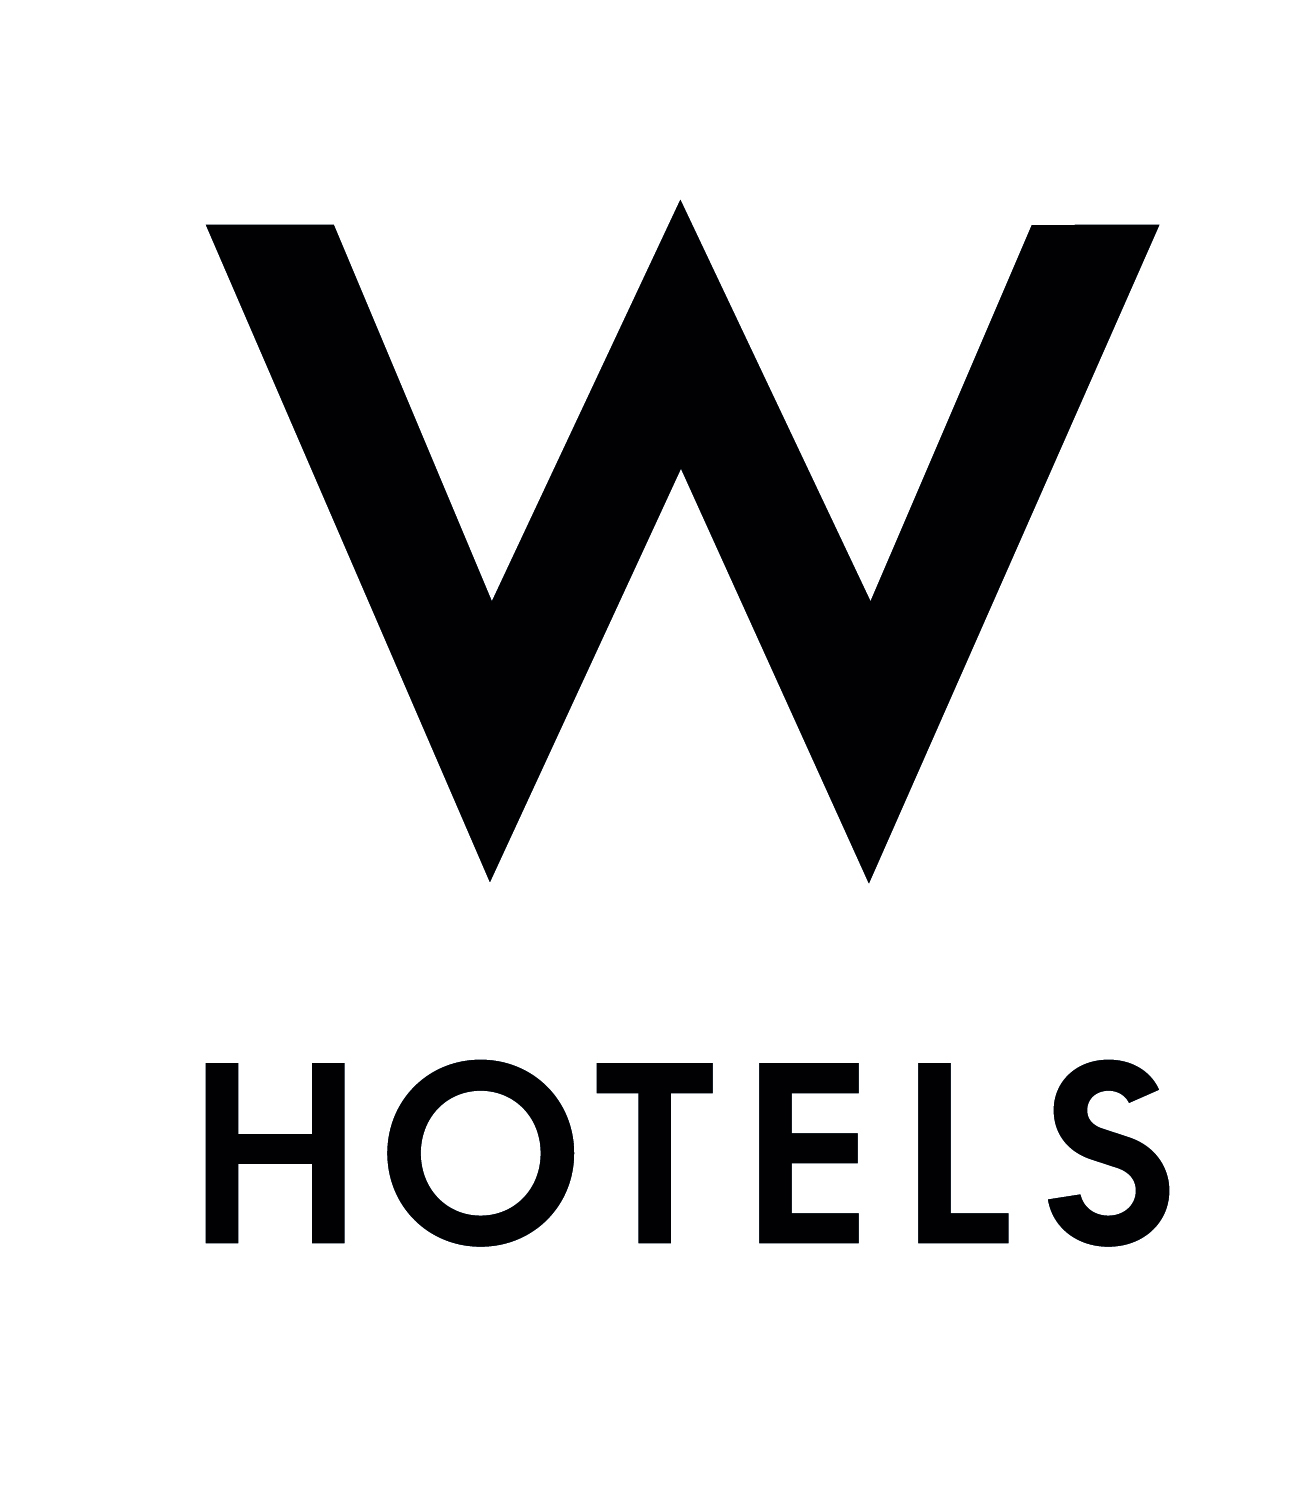 Logotipo de W Hotels